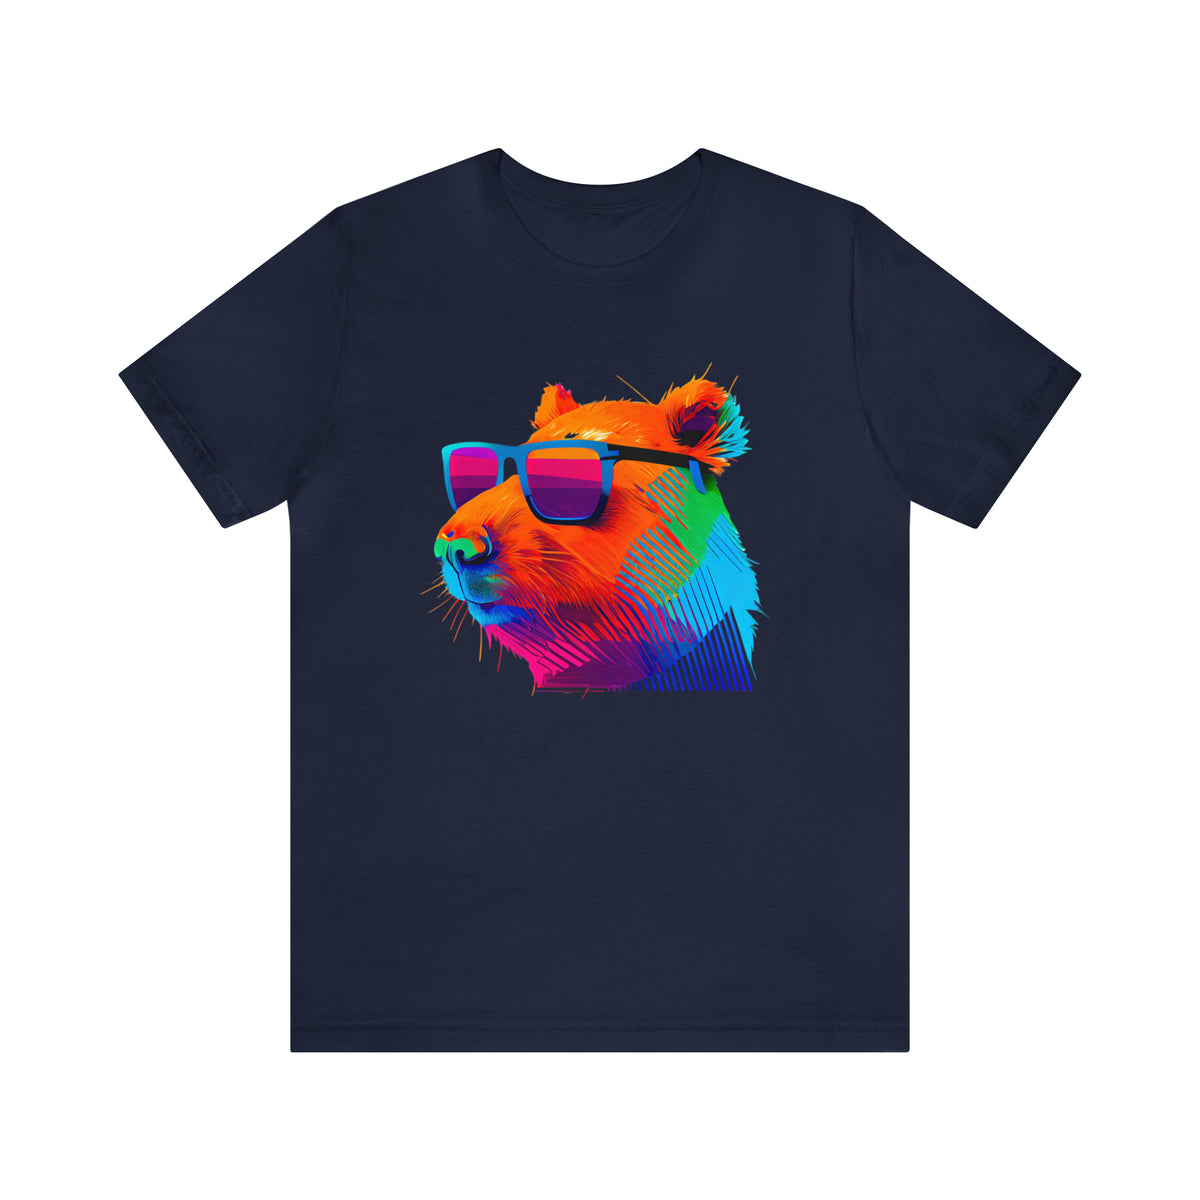 Cool Sunglasses Capybara Shirt | Capybara Lover Gift | Capybara Art Shirt | Retro Capybara Shirt | Unisex Jersey T-shirt